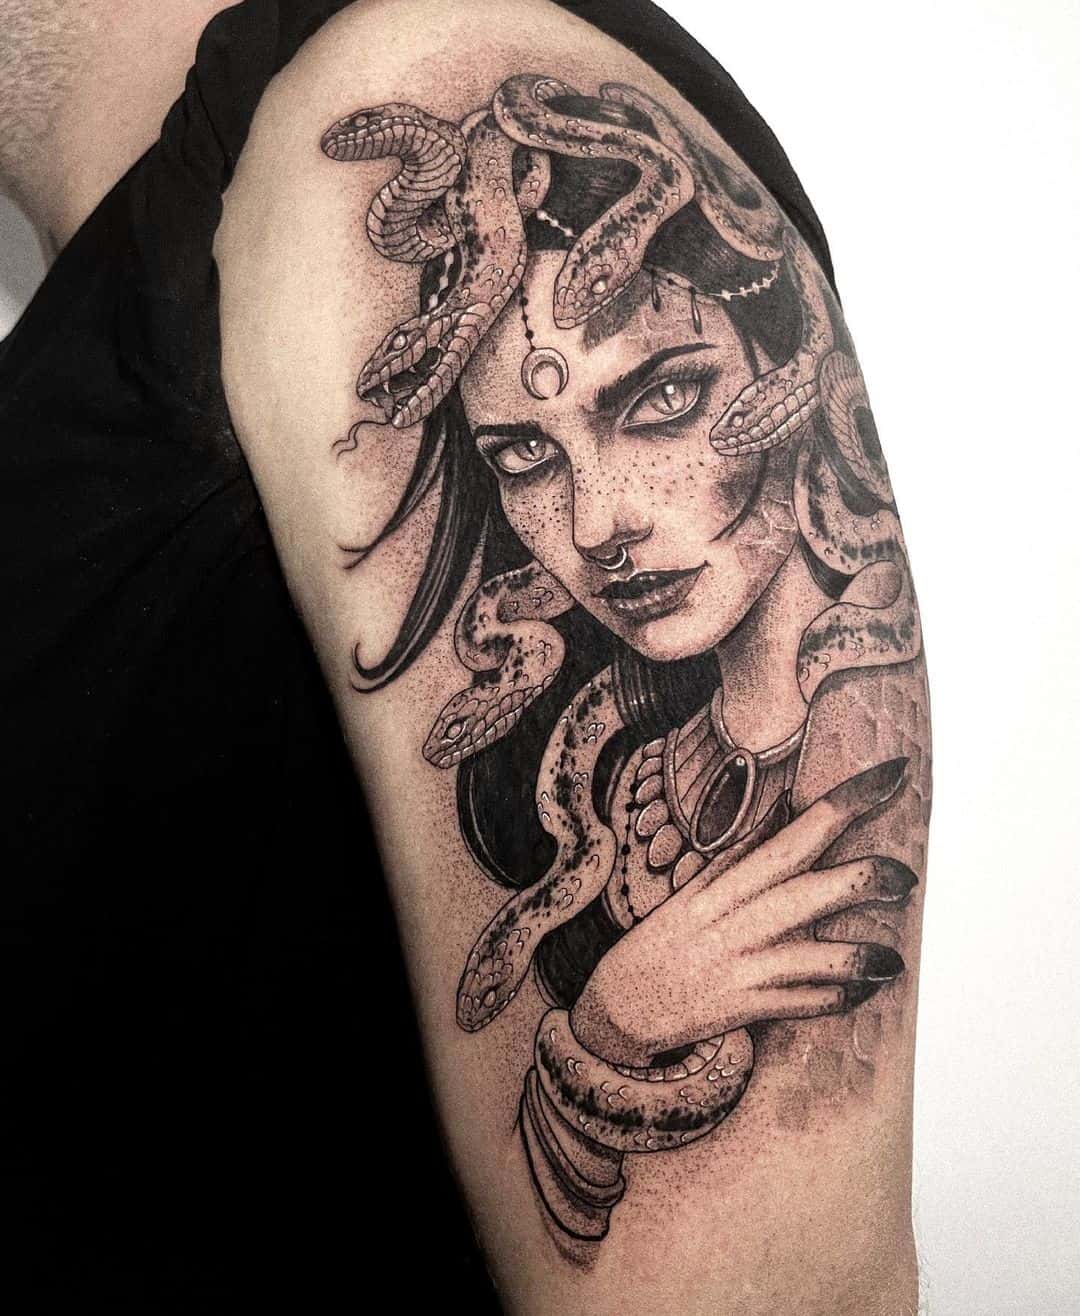 50 Medusa Tattoo Ideas: From Ancient Greek Legend to Modern Body Art